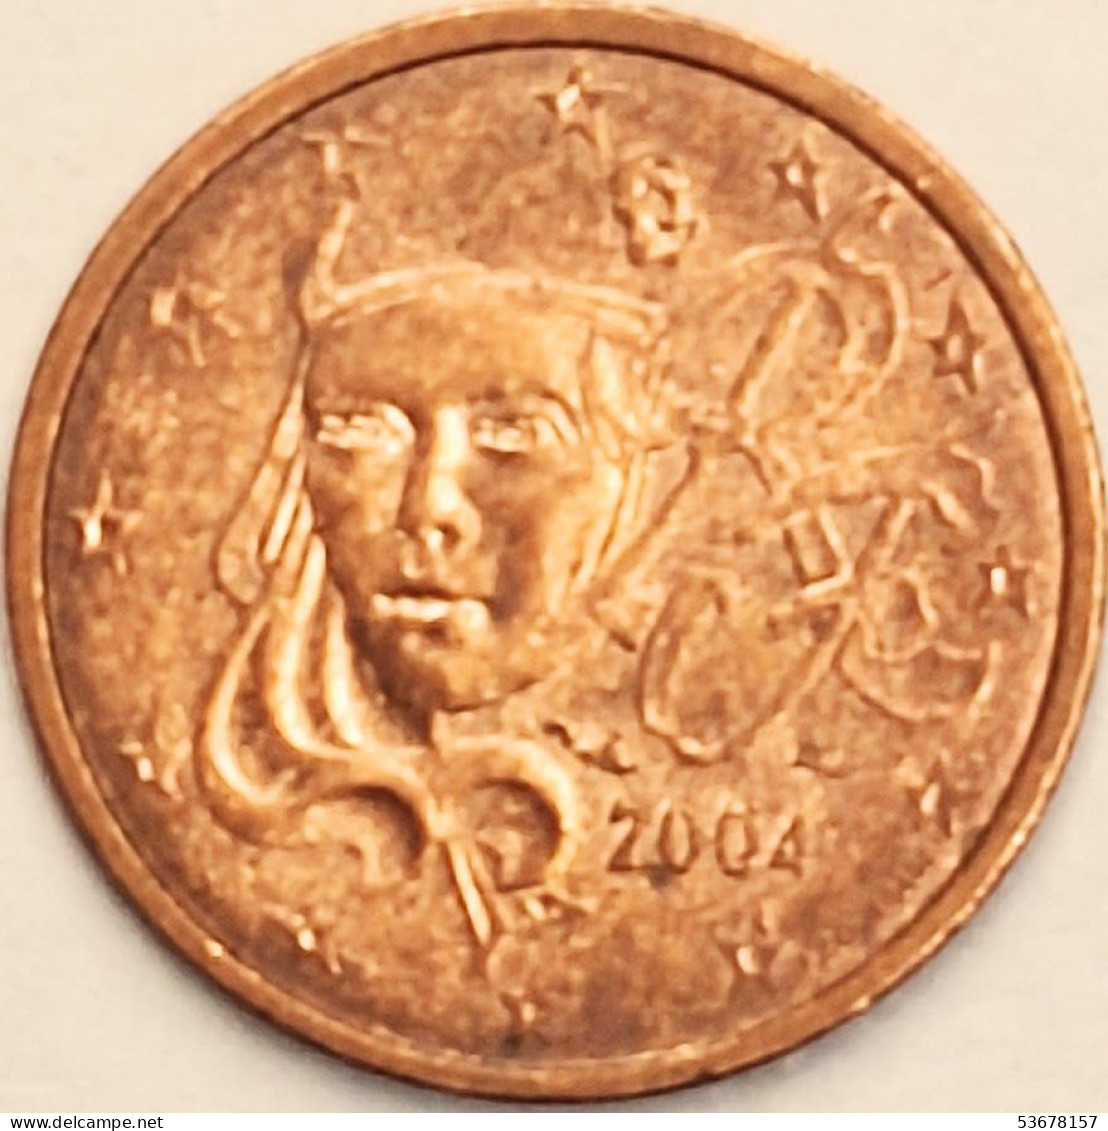 France - 2 Euro Cent 2004, KM# 1283 (#4373) - France